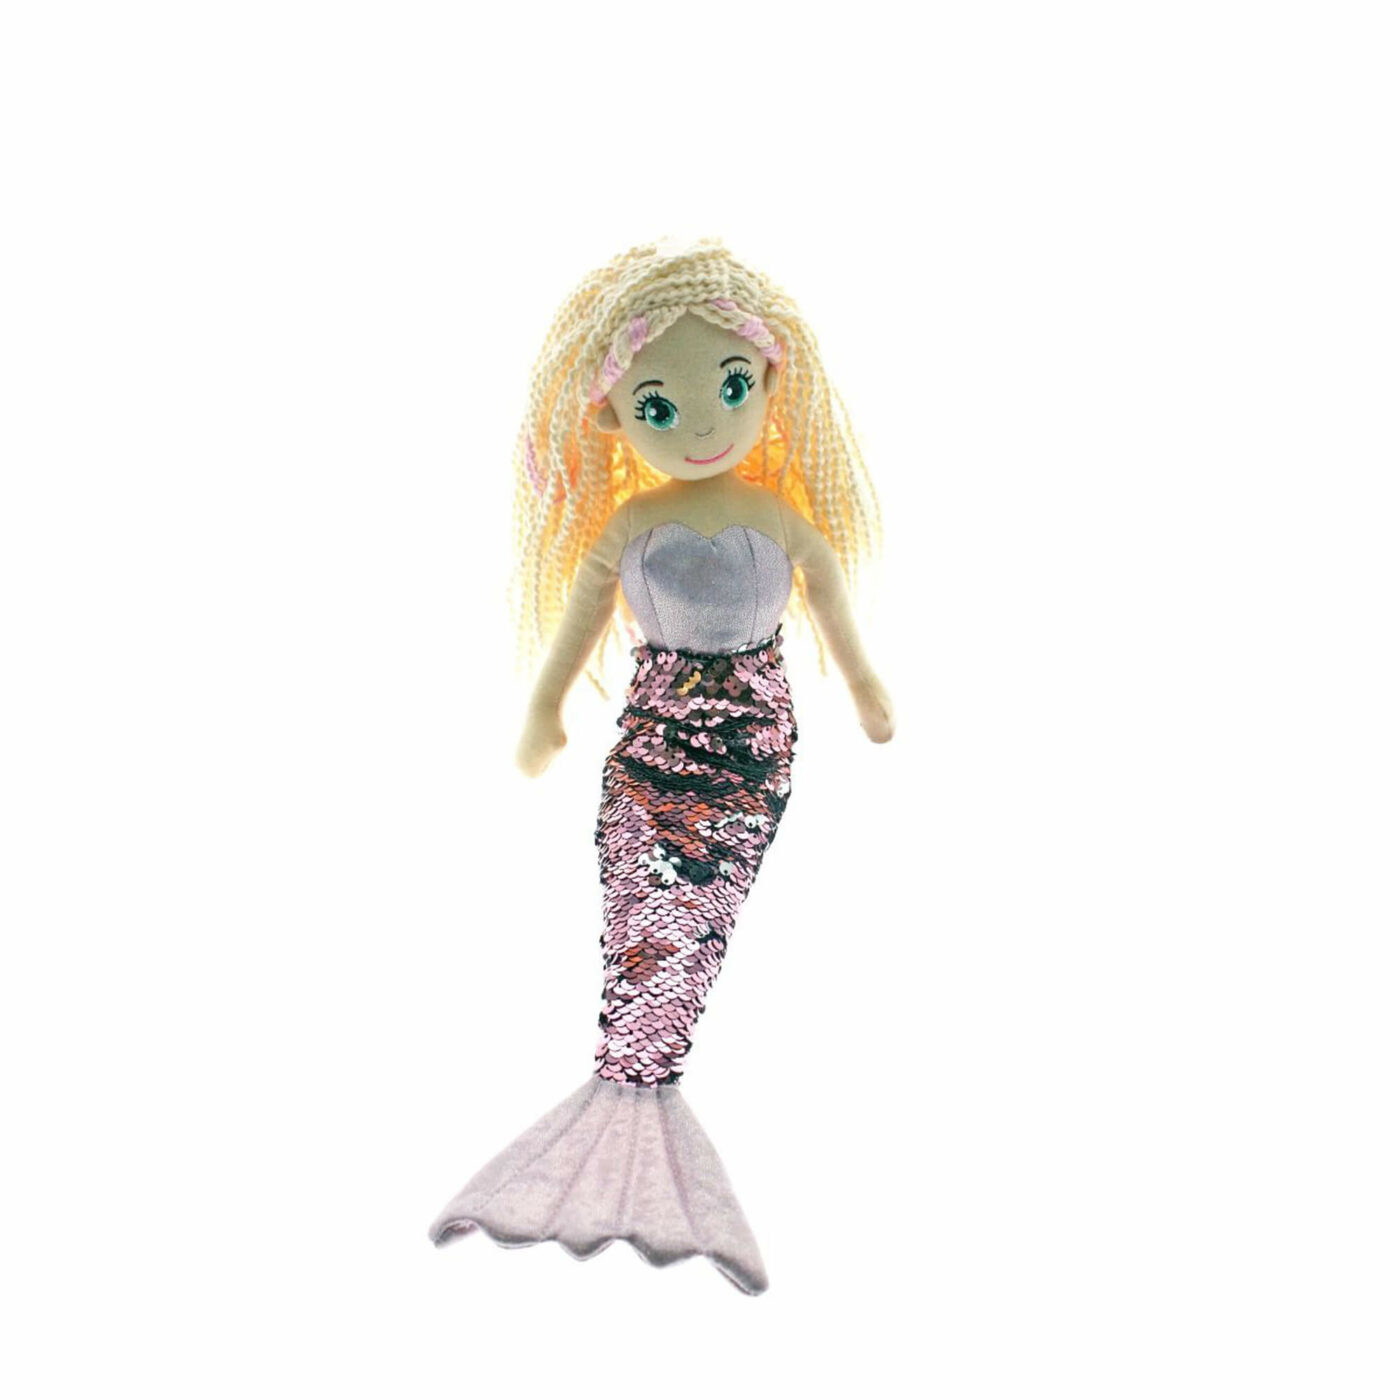 Cotton Candy - Mermaid Rag Doll Assortment1